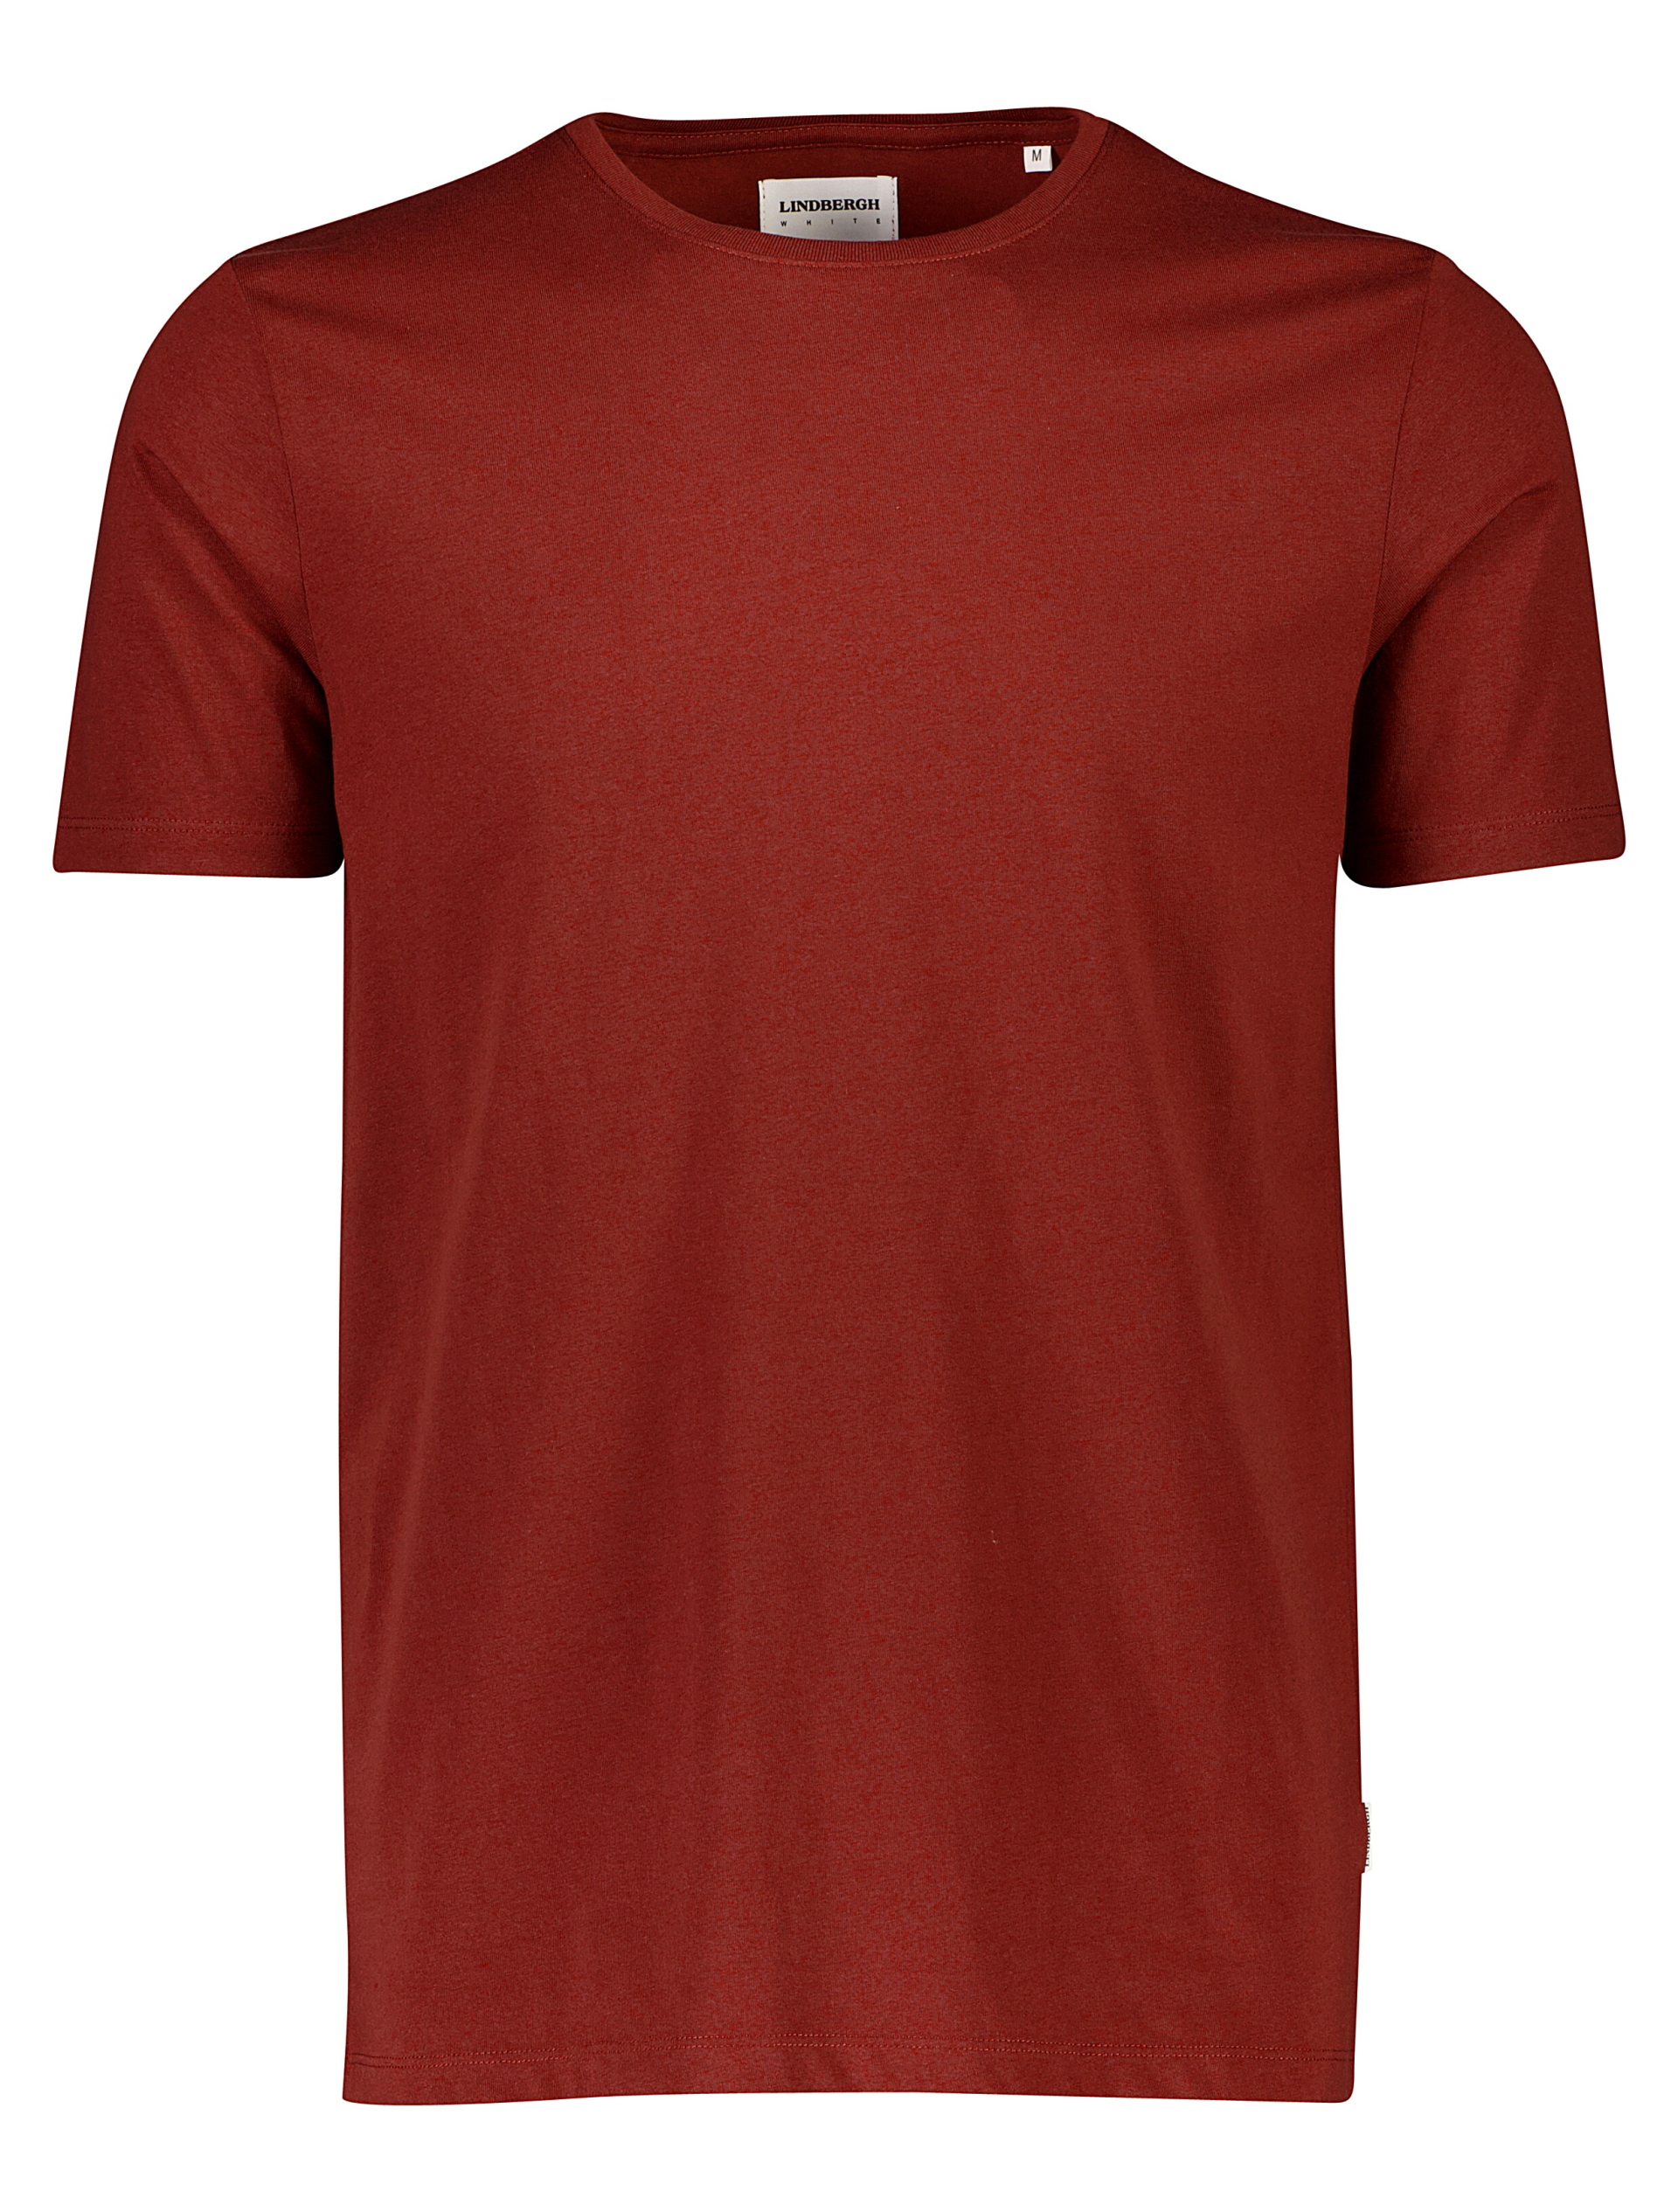 Lindbergh T-Shirt rot / burnt red mix